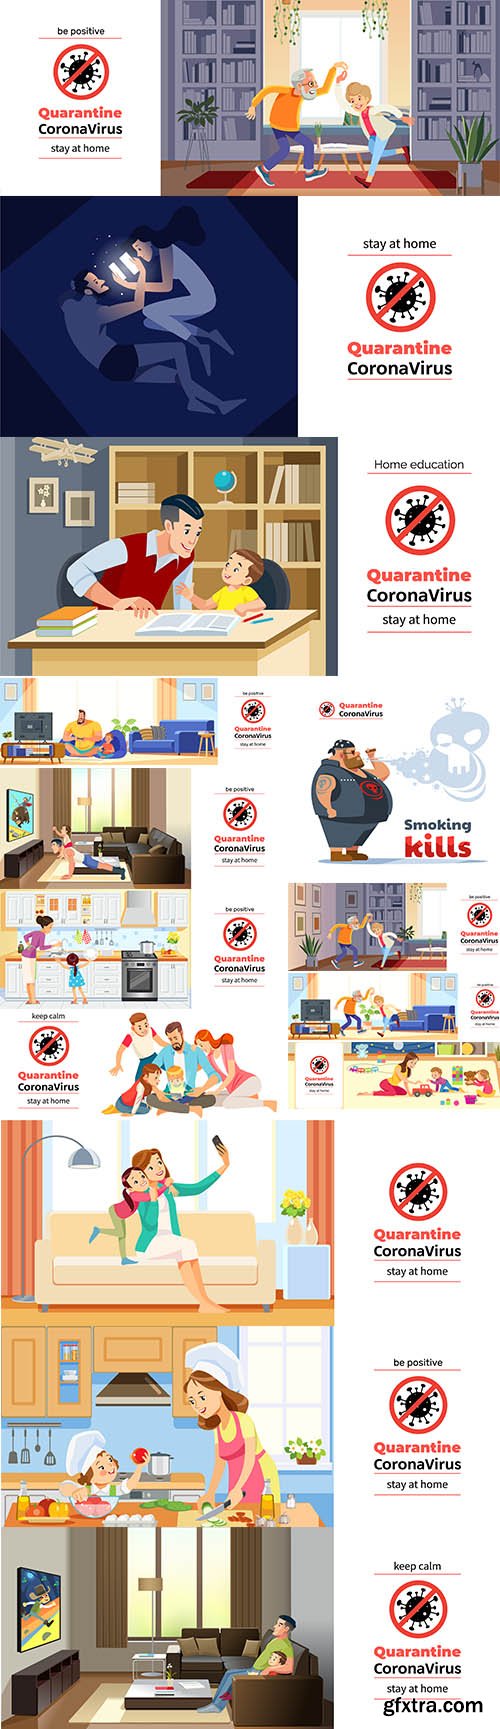 Coronavirus Quarantine Motivational Poster Positive Stay Home Collection